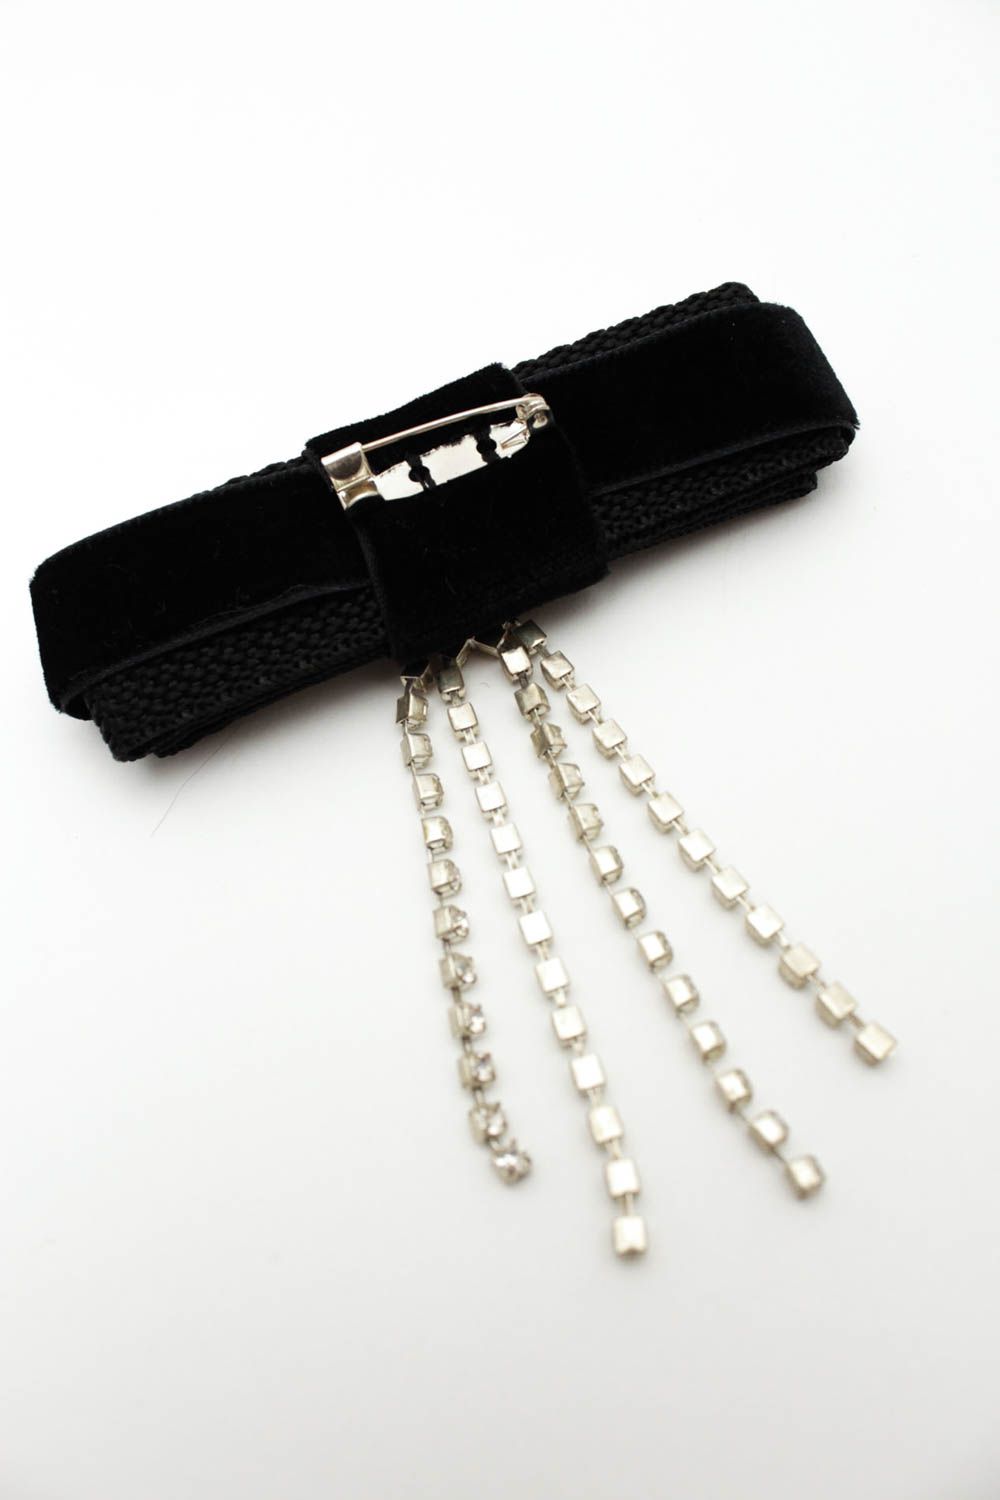 Handmade vintage brooch designer accessories fashion jewelry stylish brooch photo 4